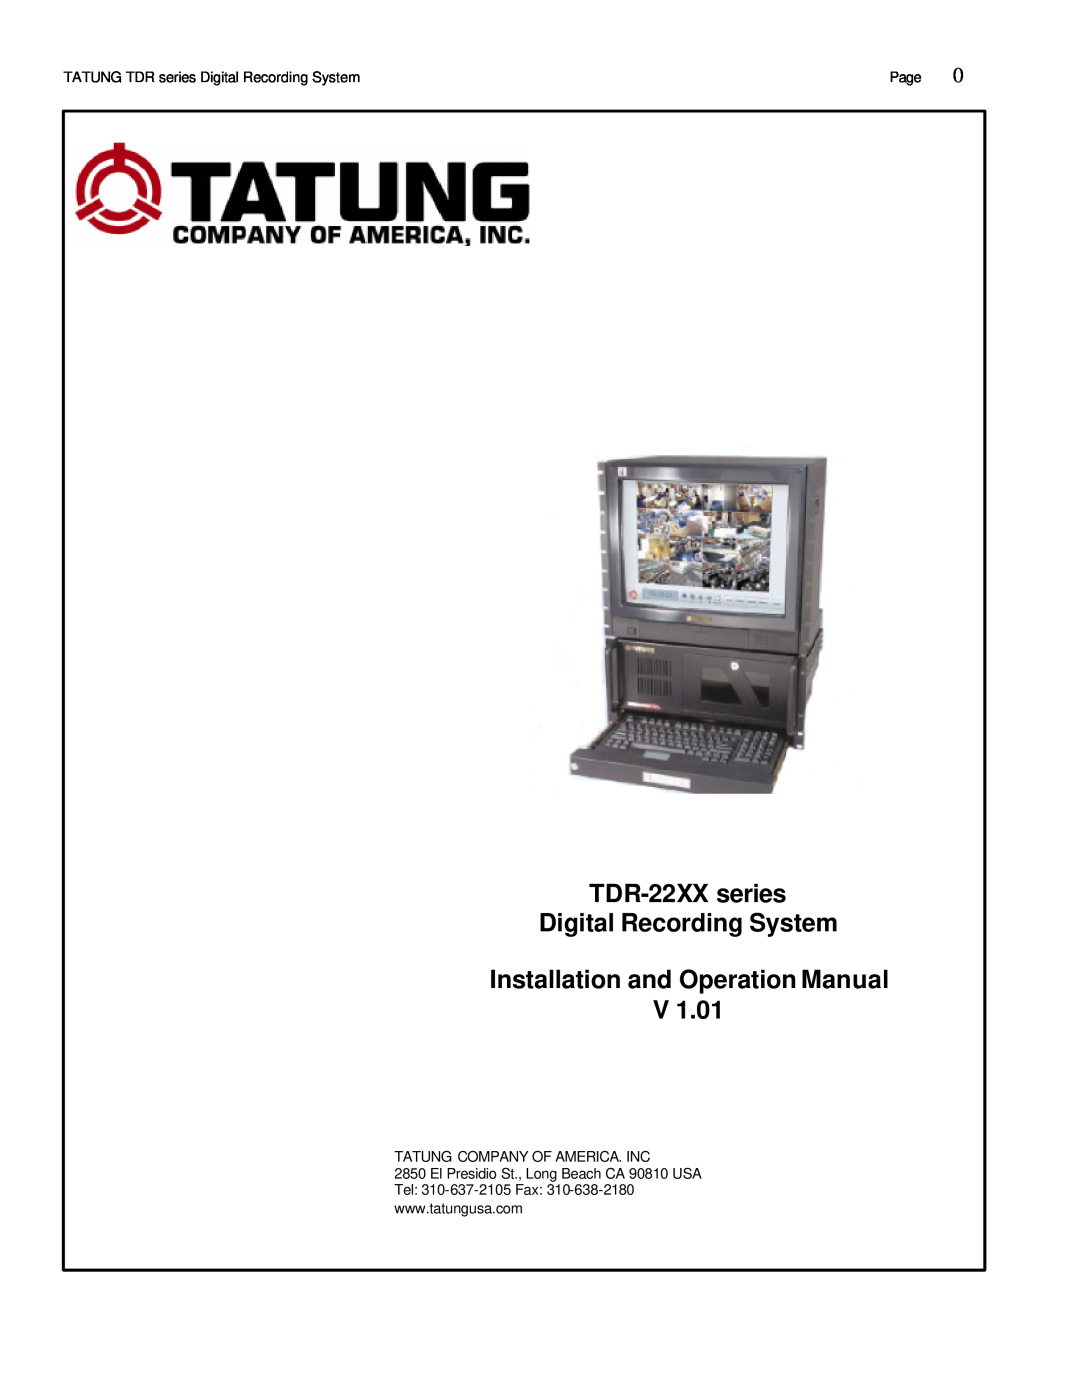 Tatung operation manual TDR-22XX series Digital Recording System, TATUNG TDR series Digital Recording System, Page 